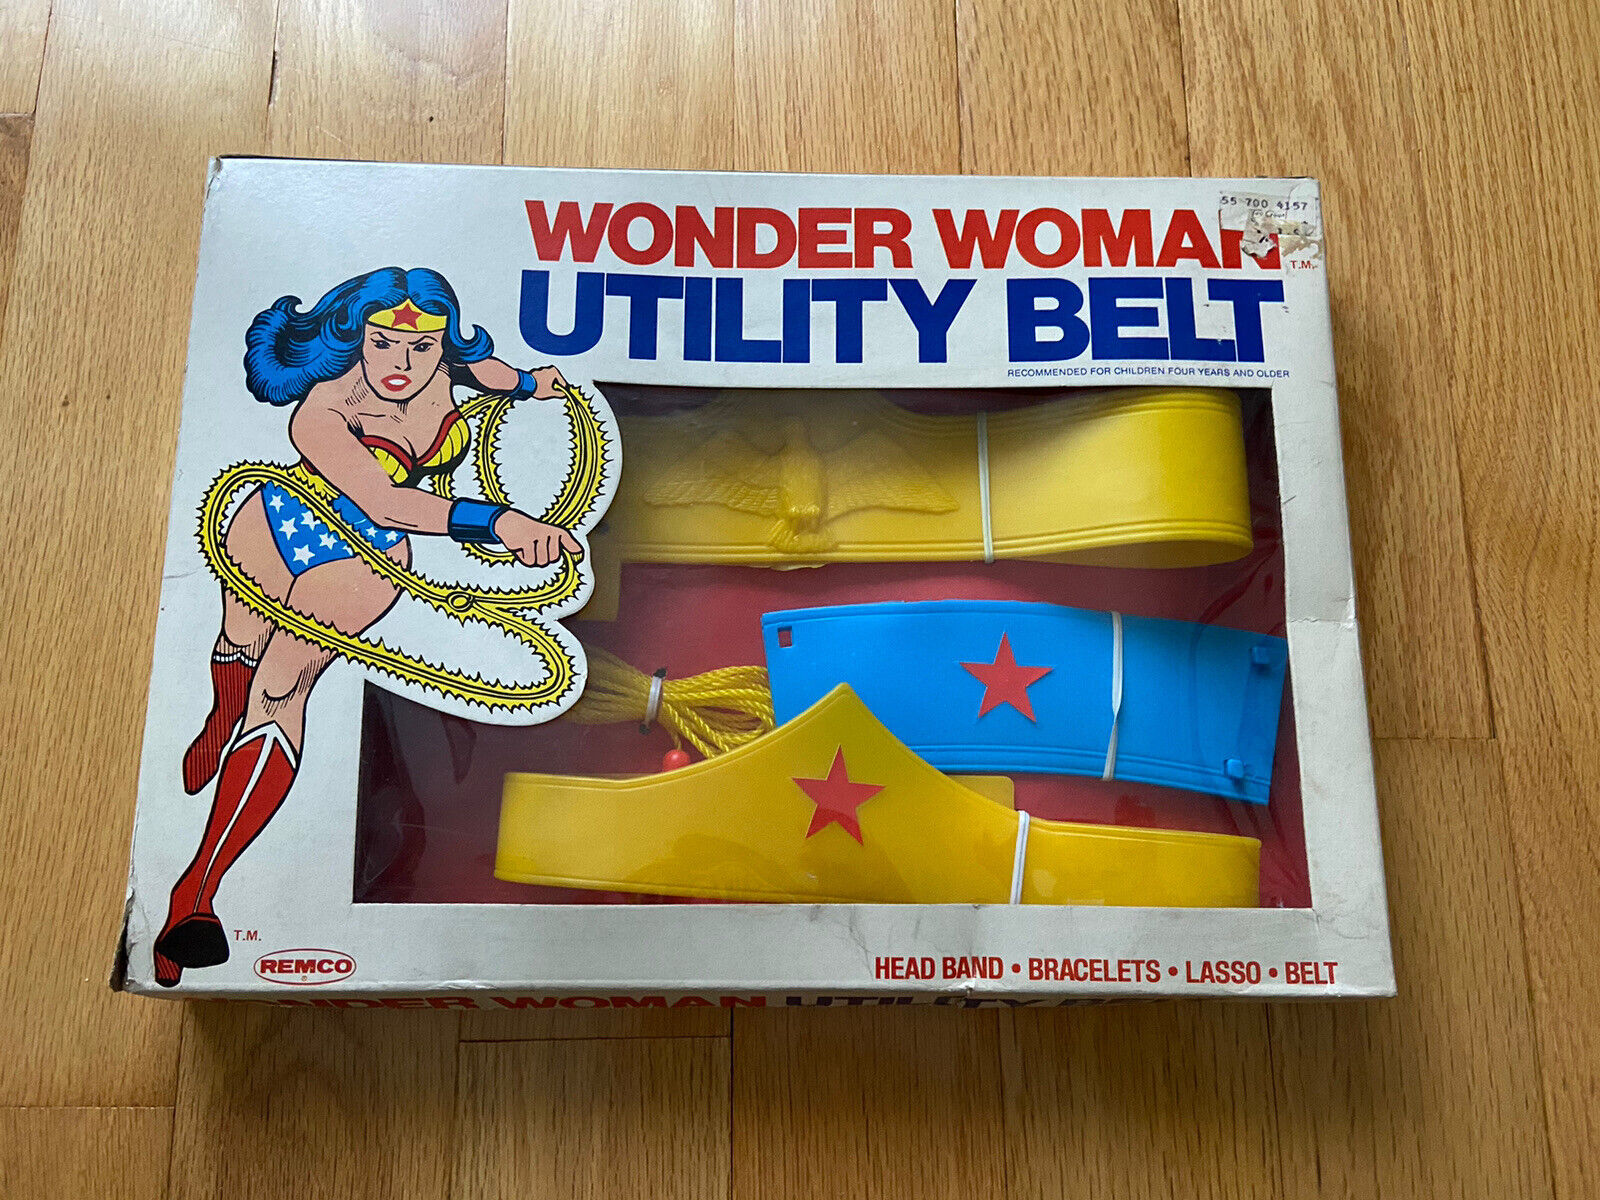 Remco Wonder Woman Utility Belt- 5 Awesome Things on eBay this week